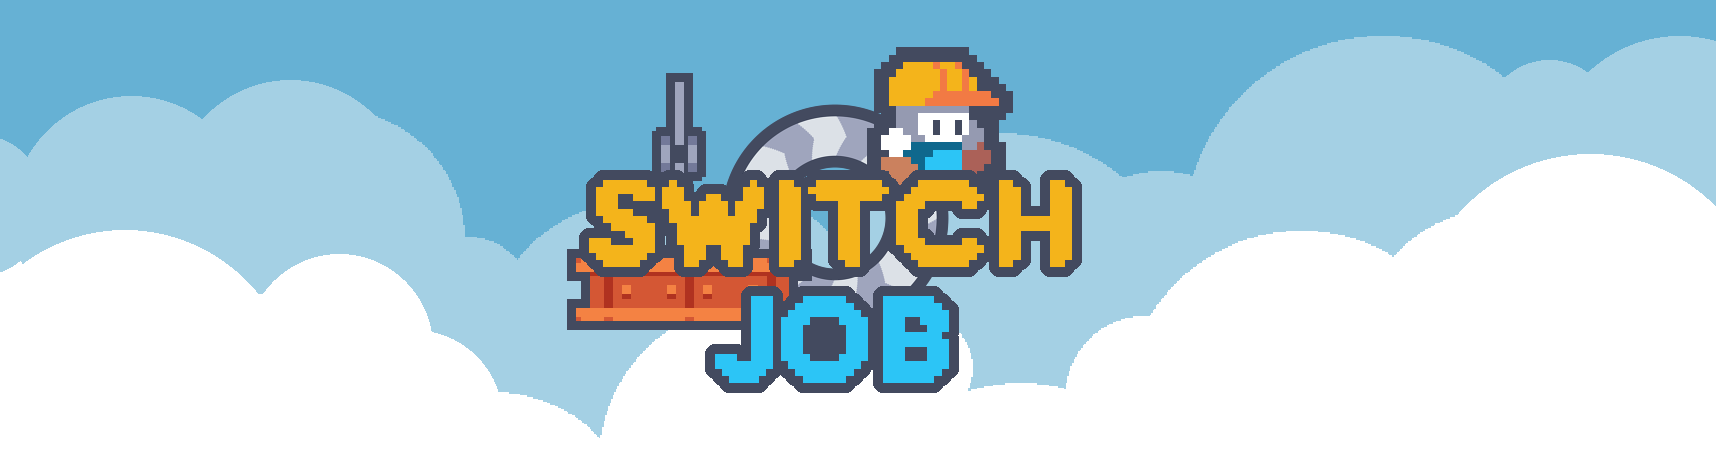 Switch Job